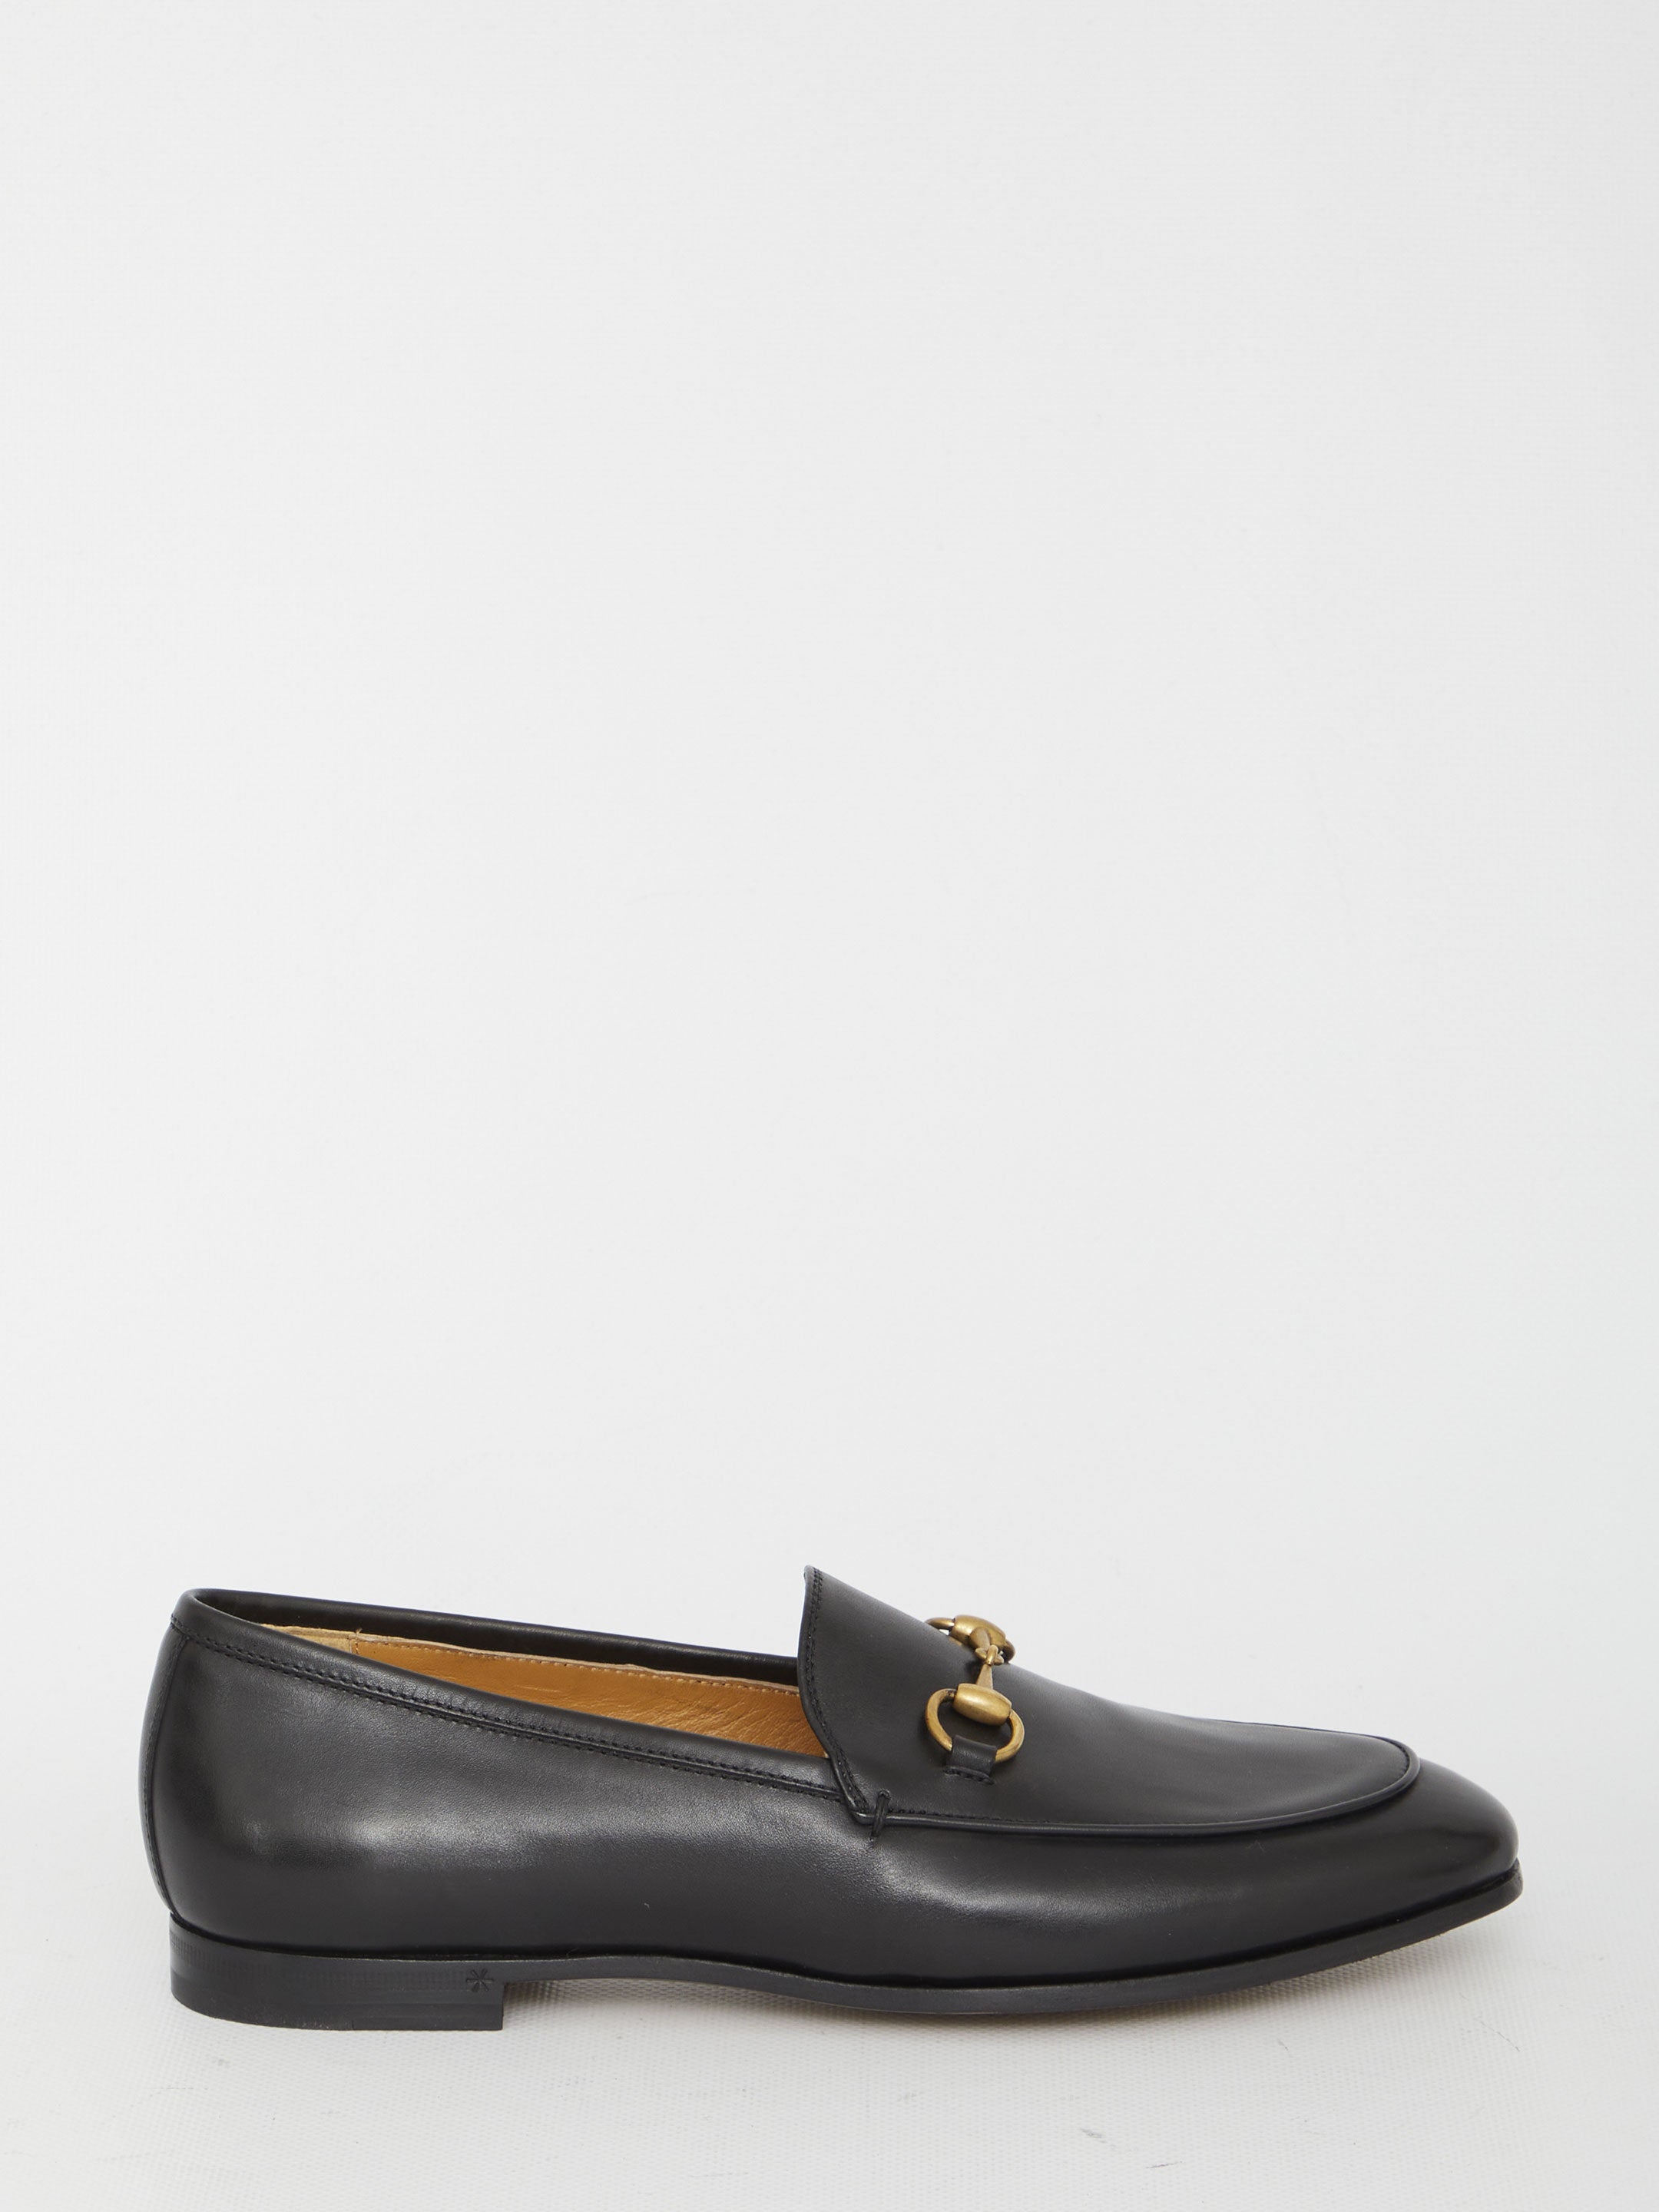 GUCCI-OUTLET-SALE-Jordan-loafers-Flache-Schuhe-38-BLACK-ARCHIVE-COLLECTION.jpg